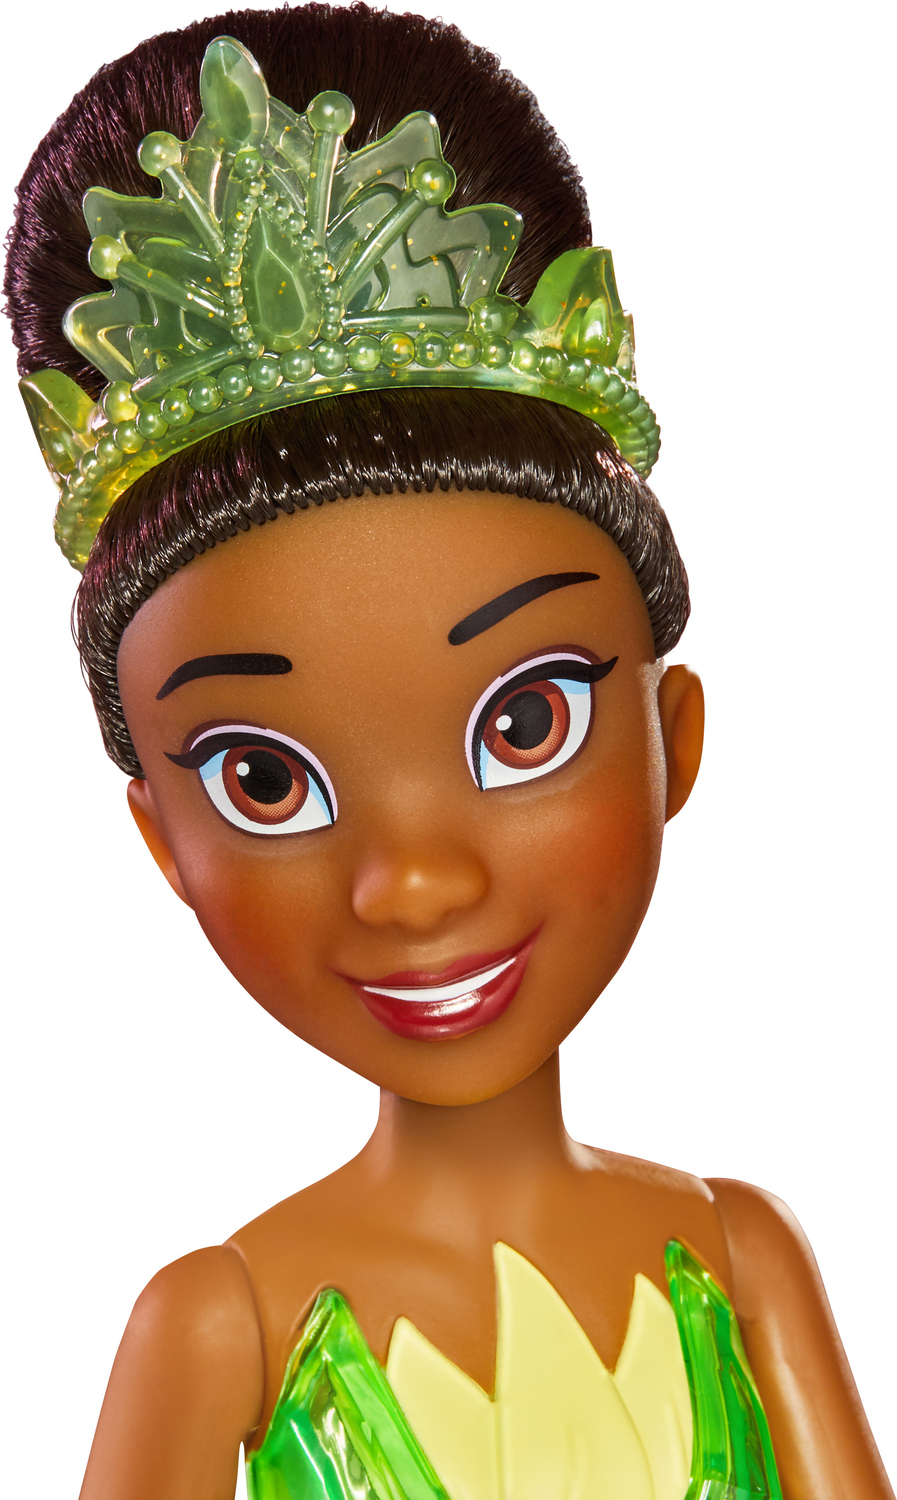 Disney Princess doll - F09015X6